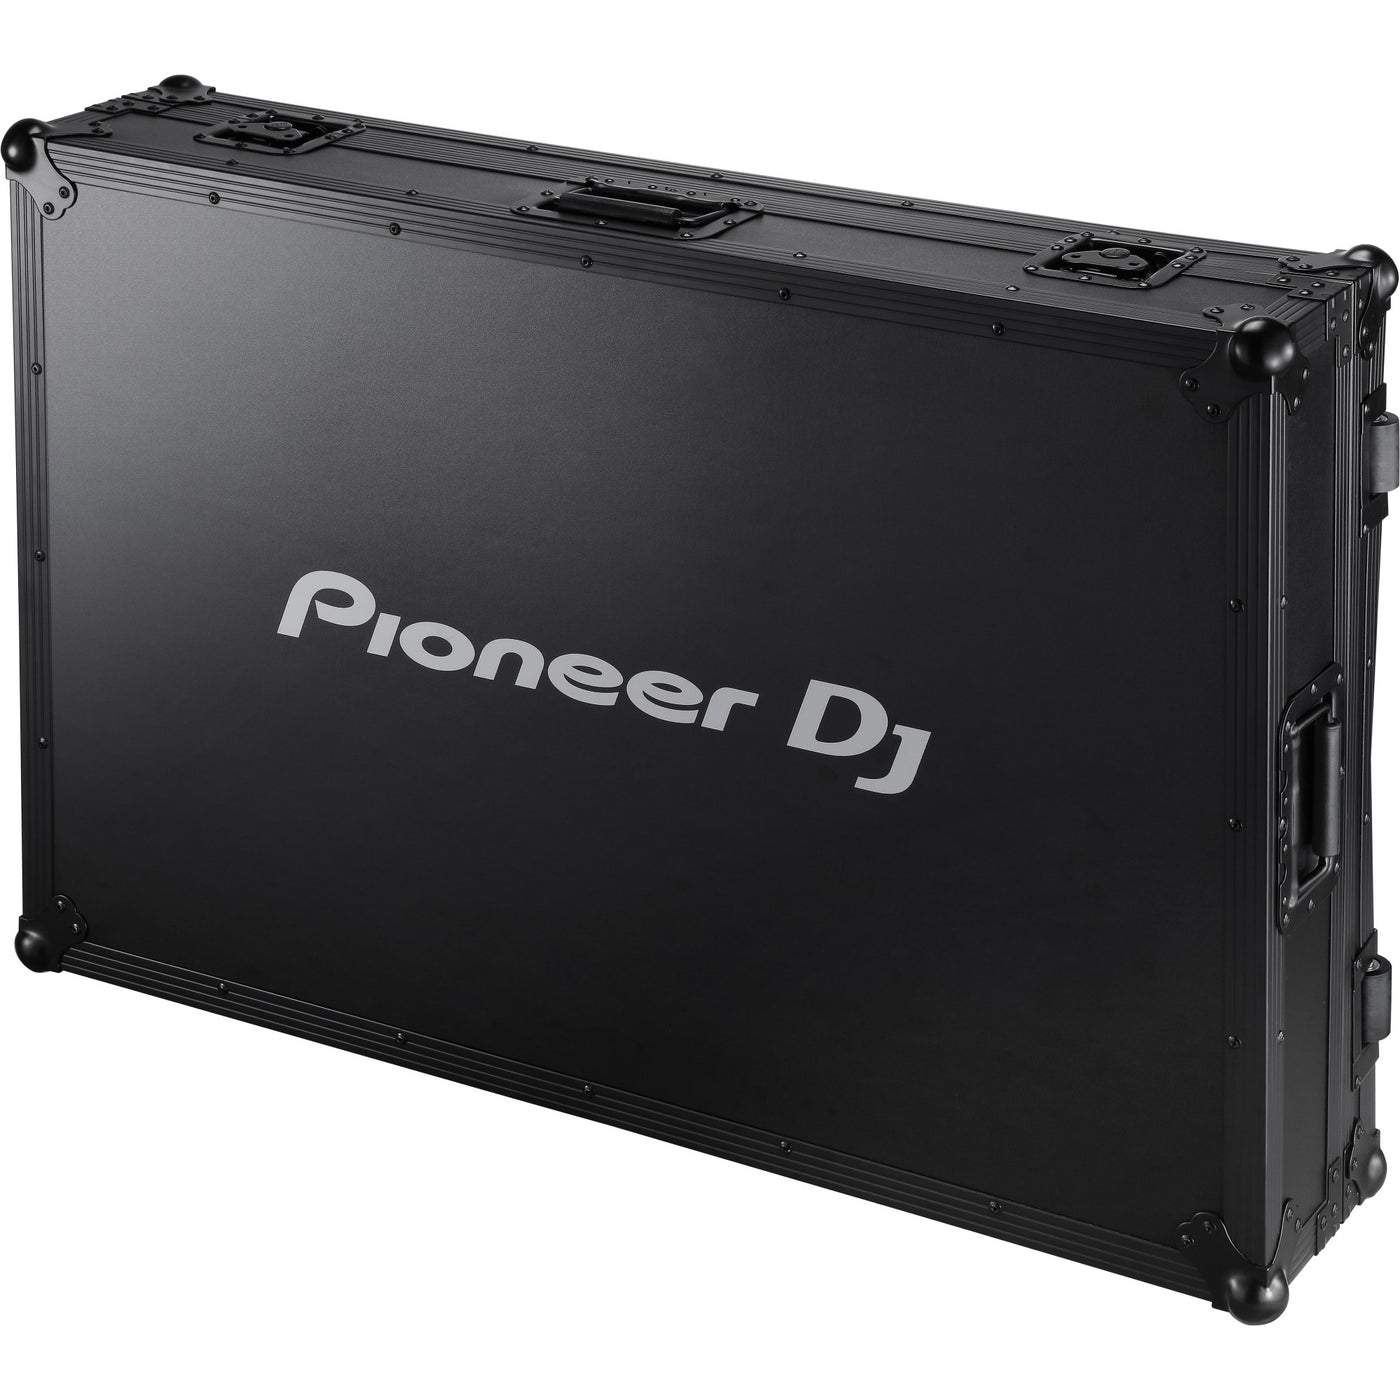 Pioneer DJ DJM-250MK2 2-Channel DJ Mixer with Independent Channel Filter with rekordbox DVS, Professional DJ Equipment Mixer Audio Interface